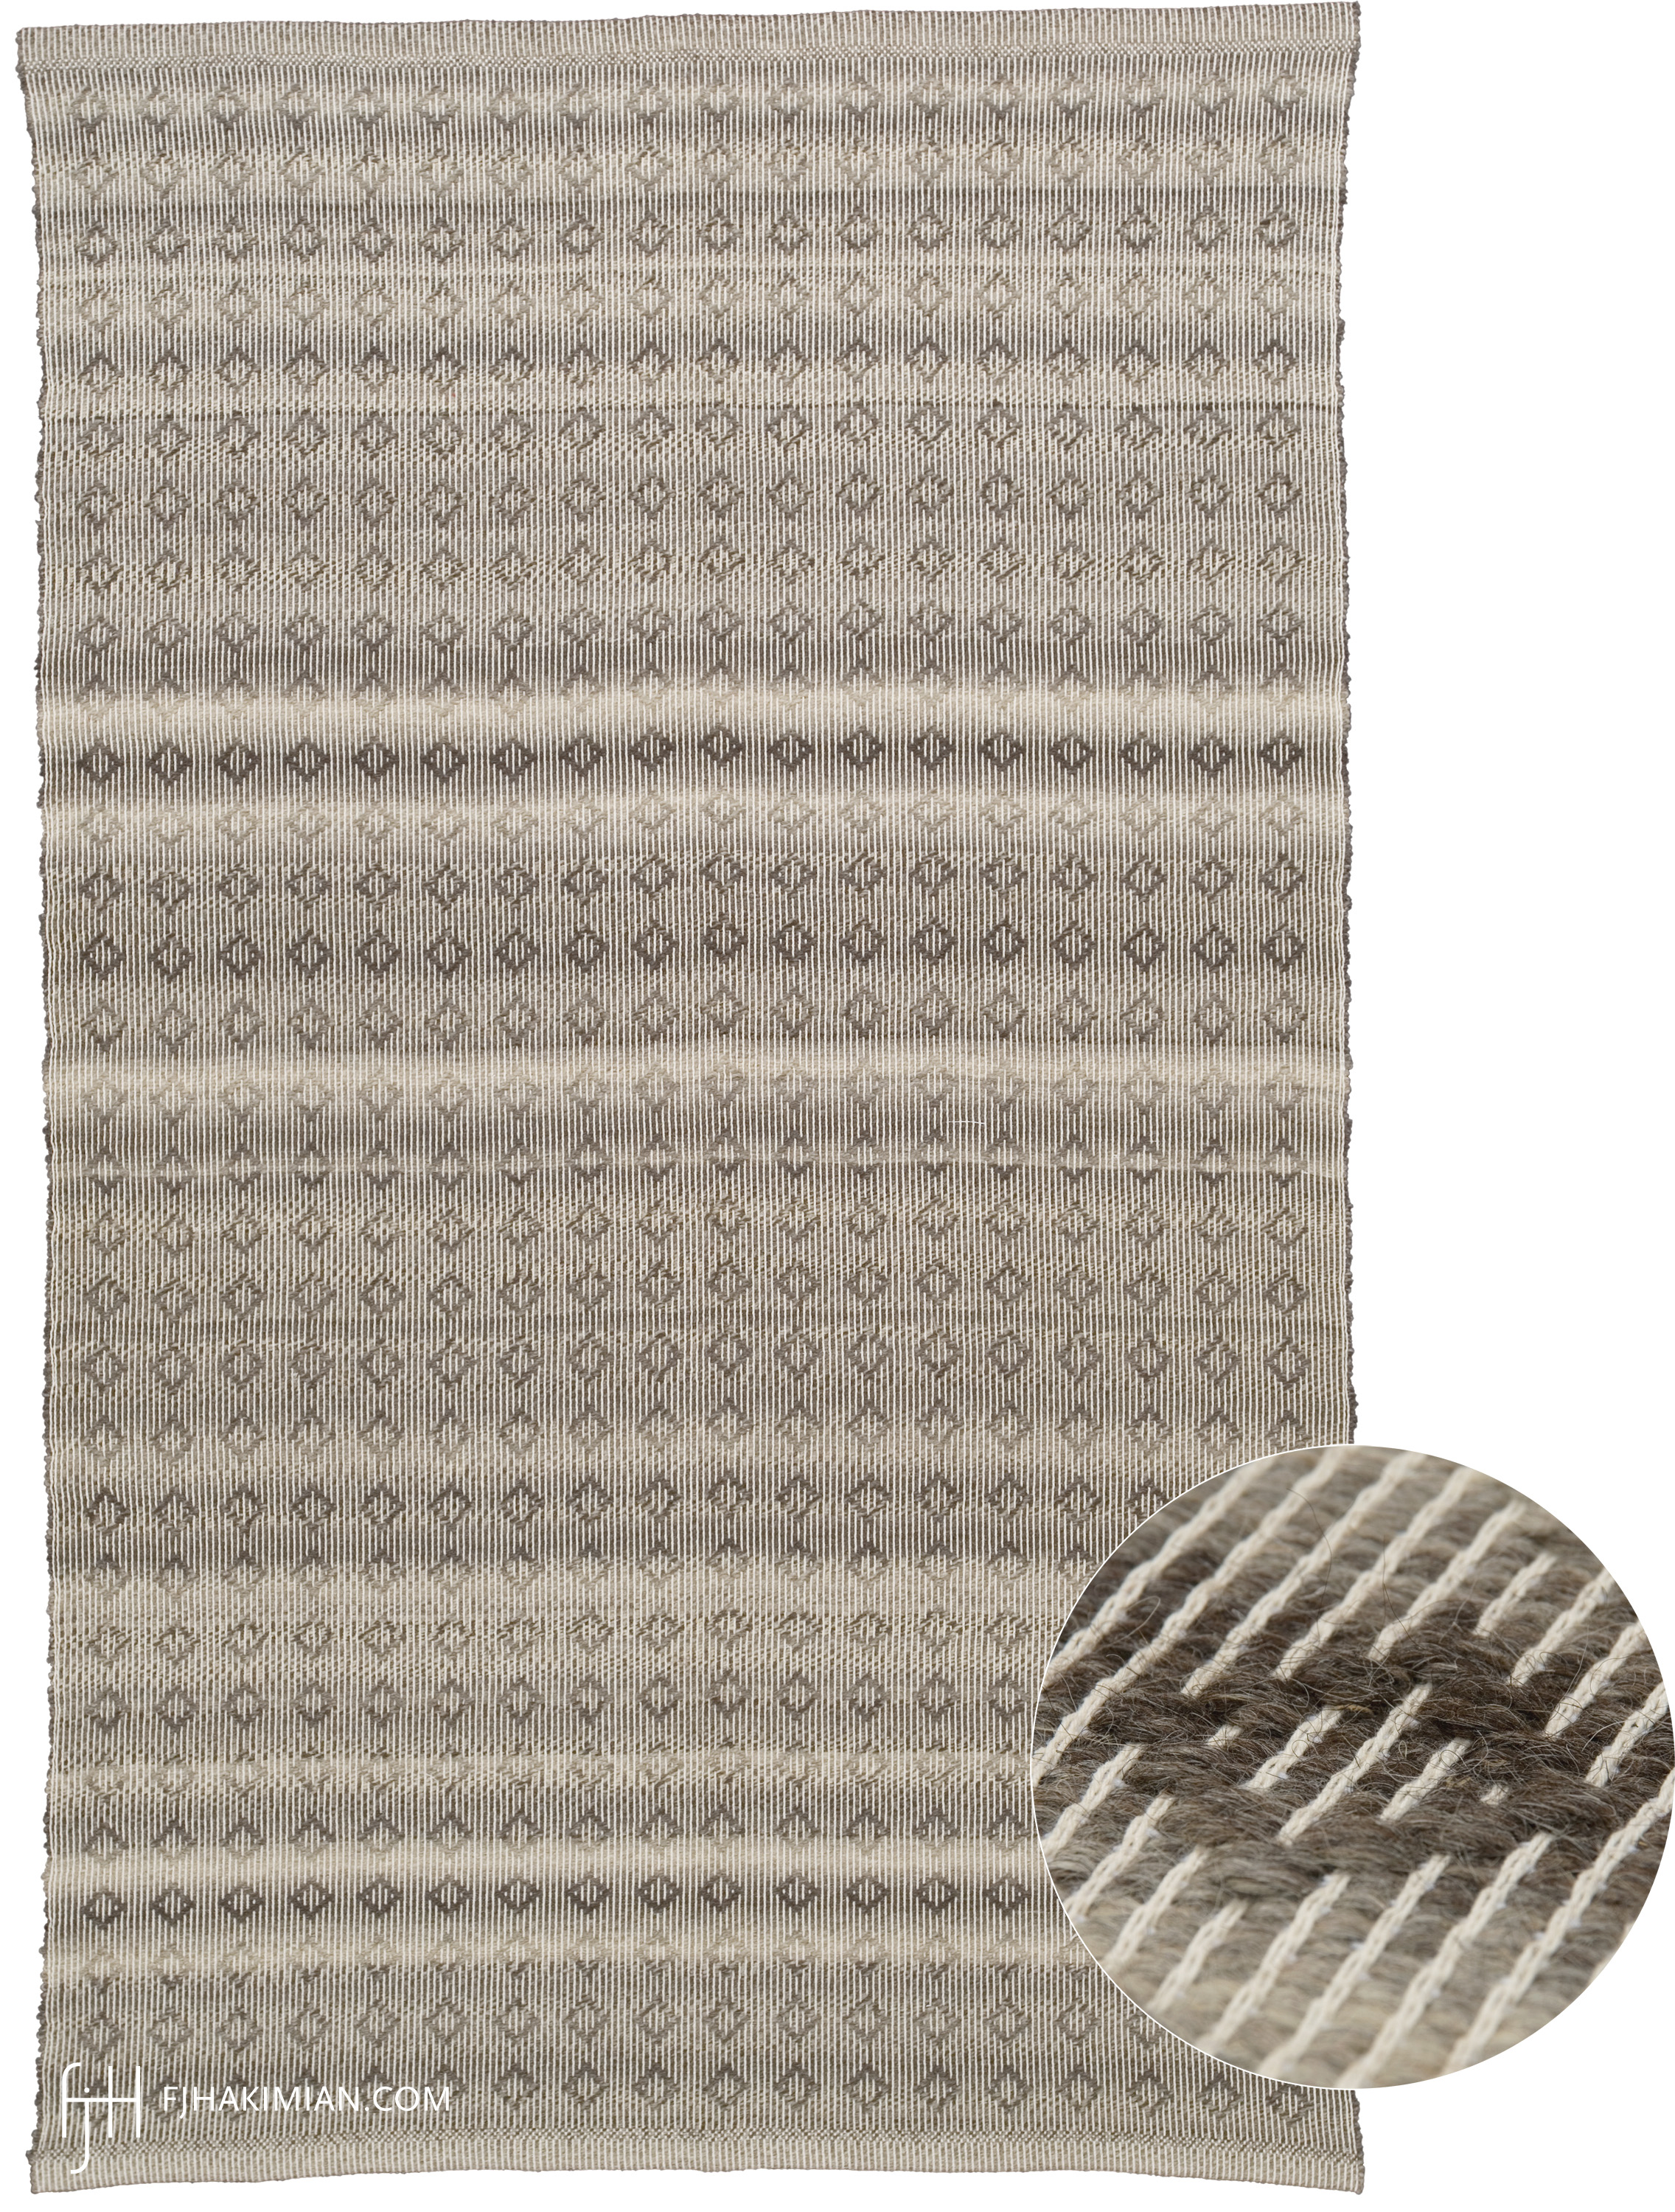 25180 | Custom Sardinian Carpet | FJ Hakimian | Carpet Gallery in NYC